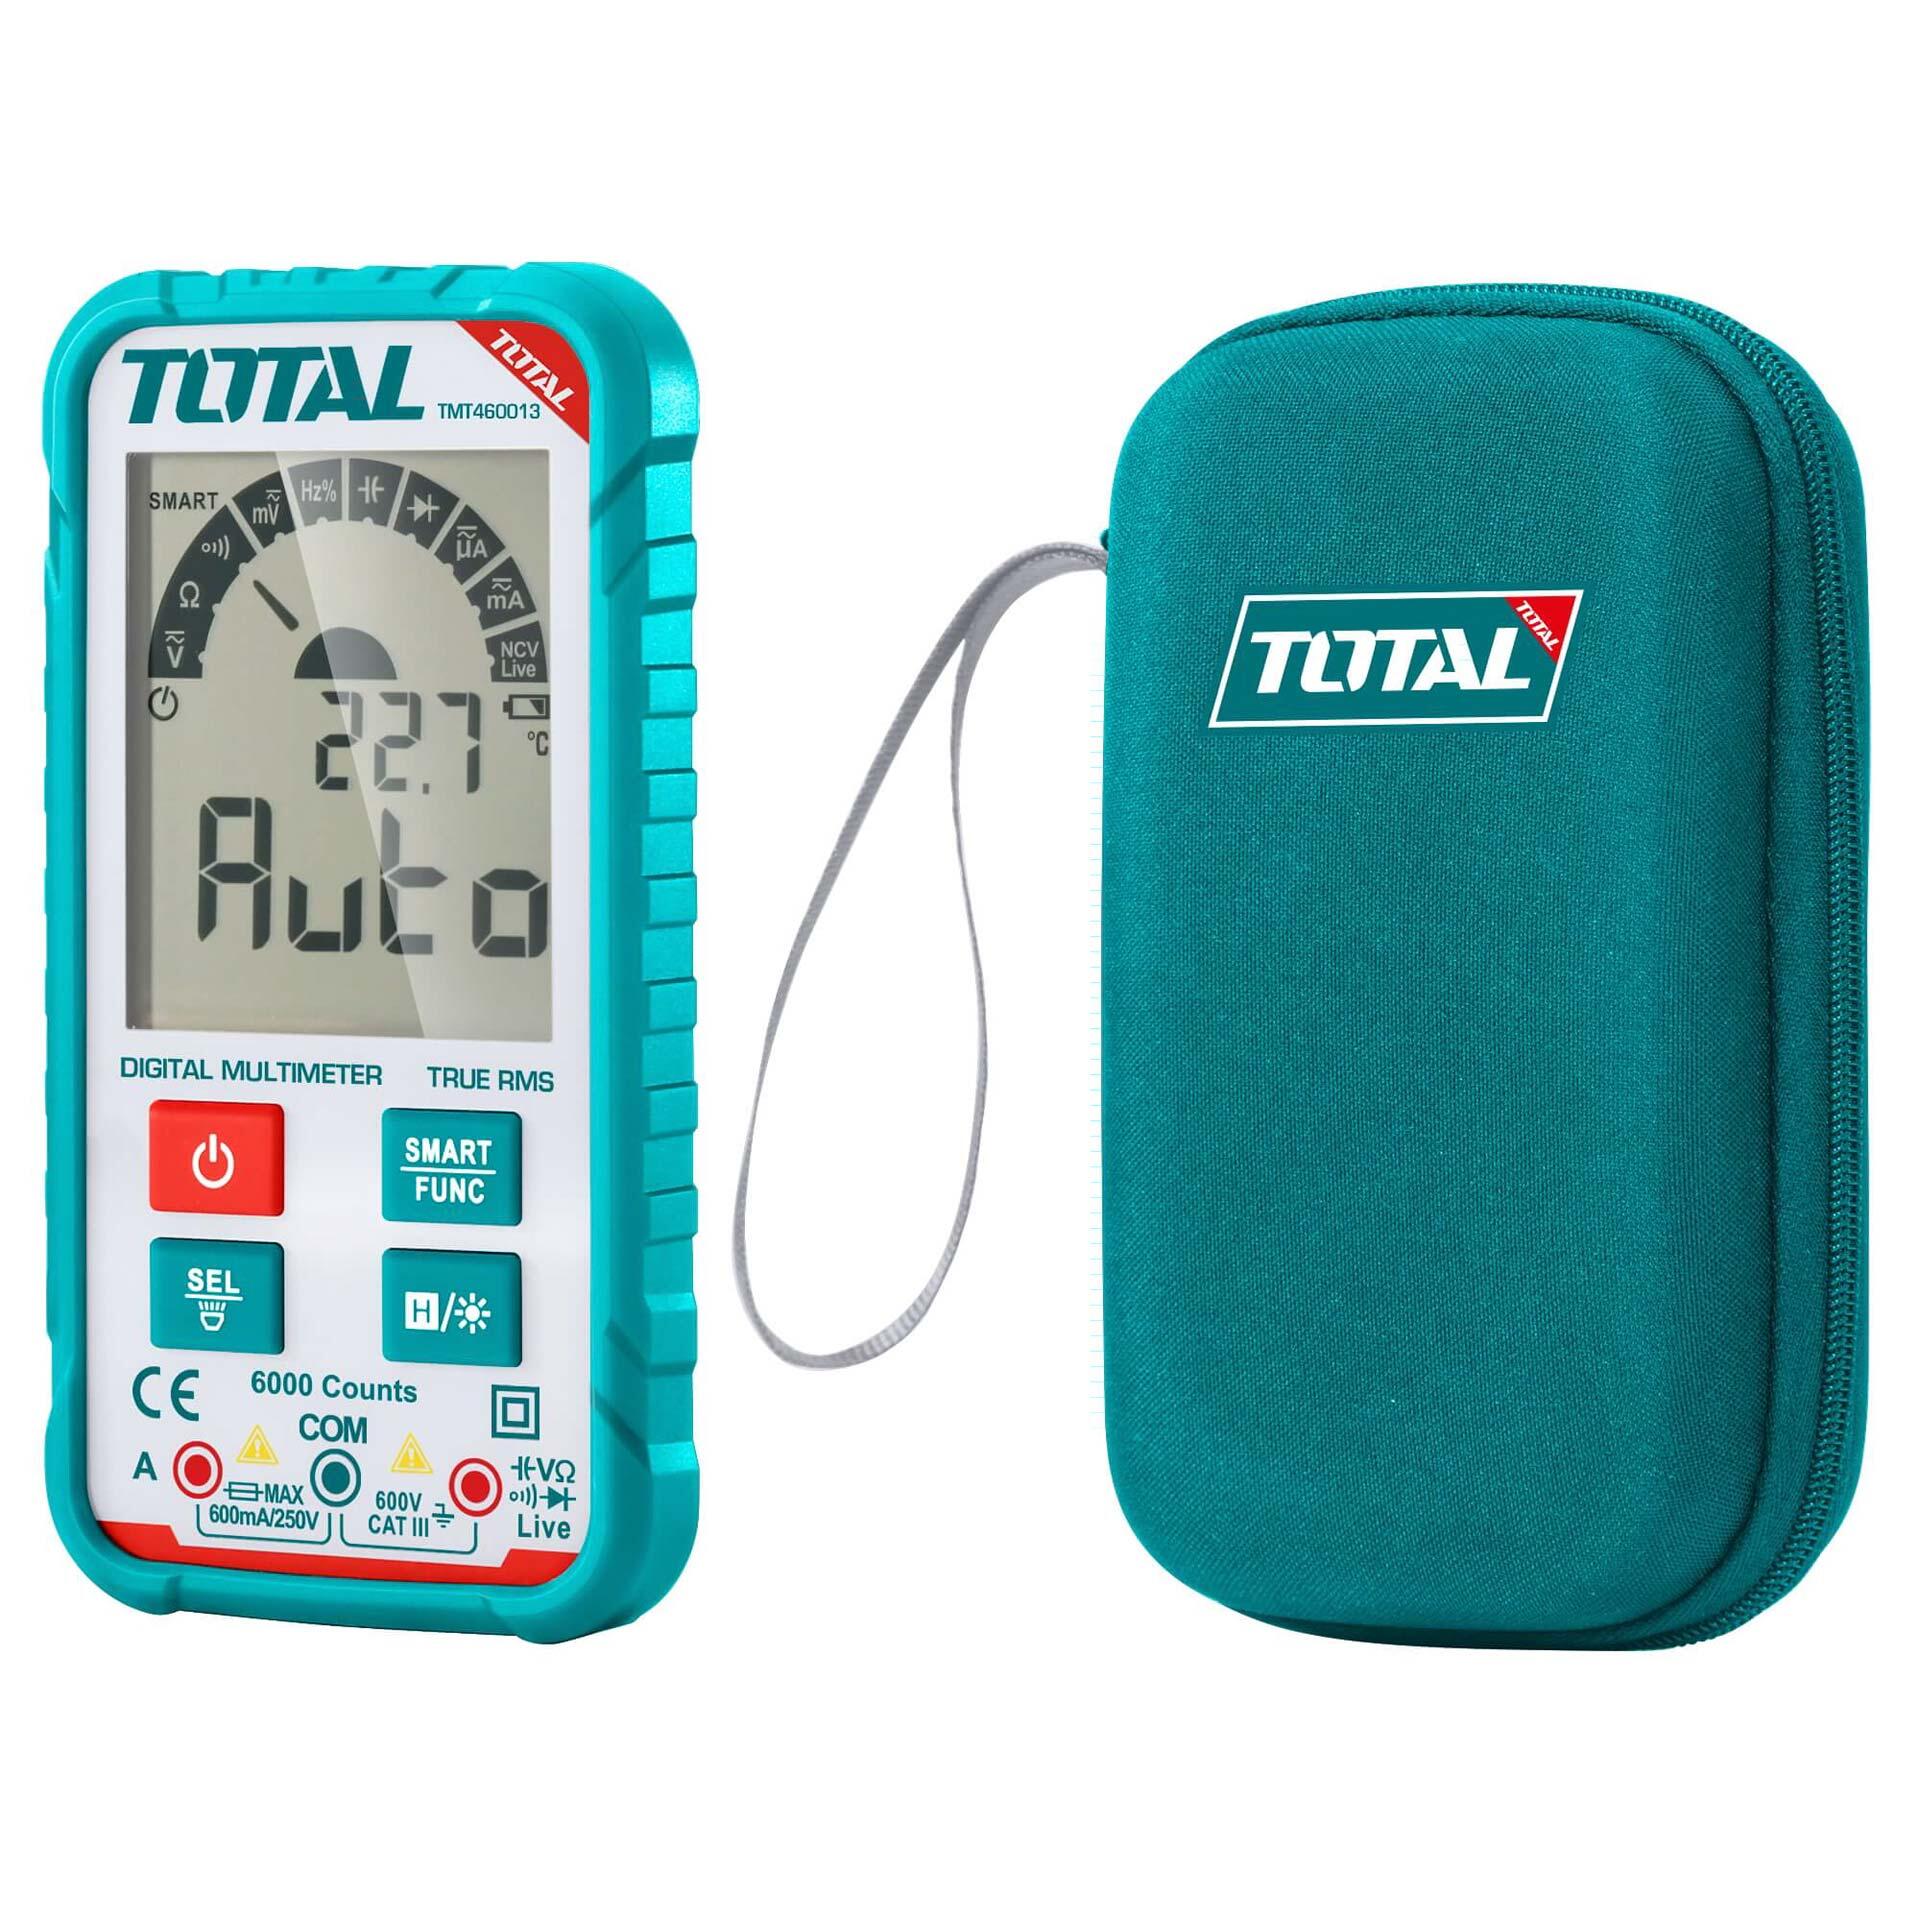 TOTAL Digital Multimeter (TMT460013)